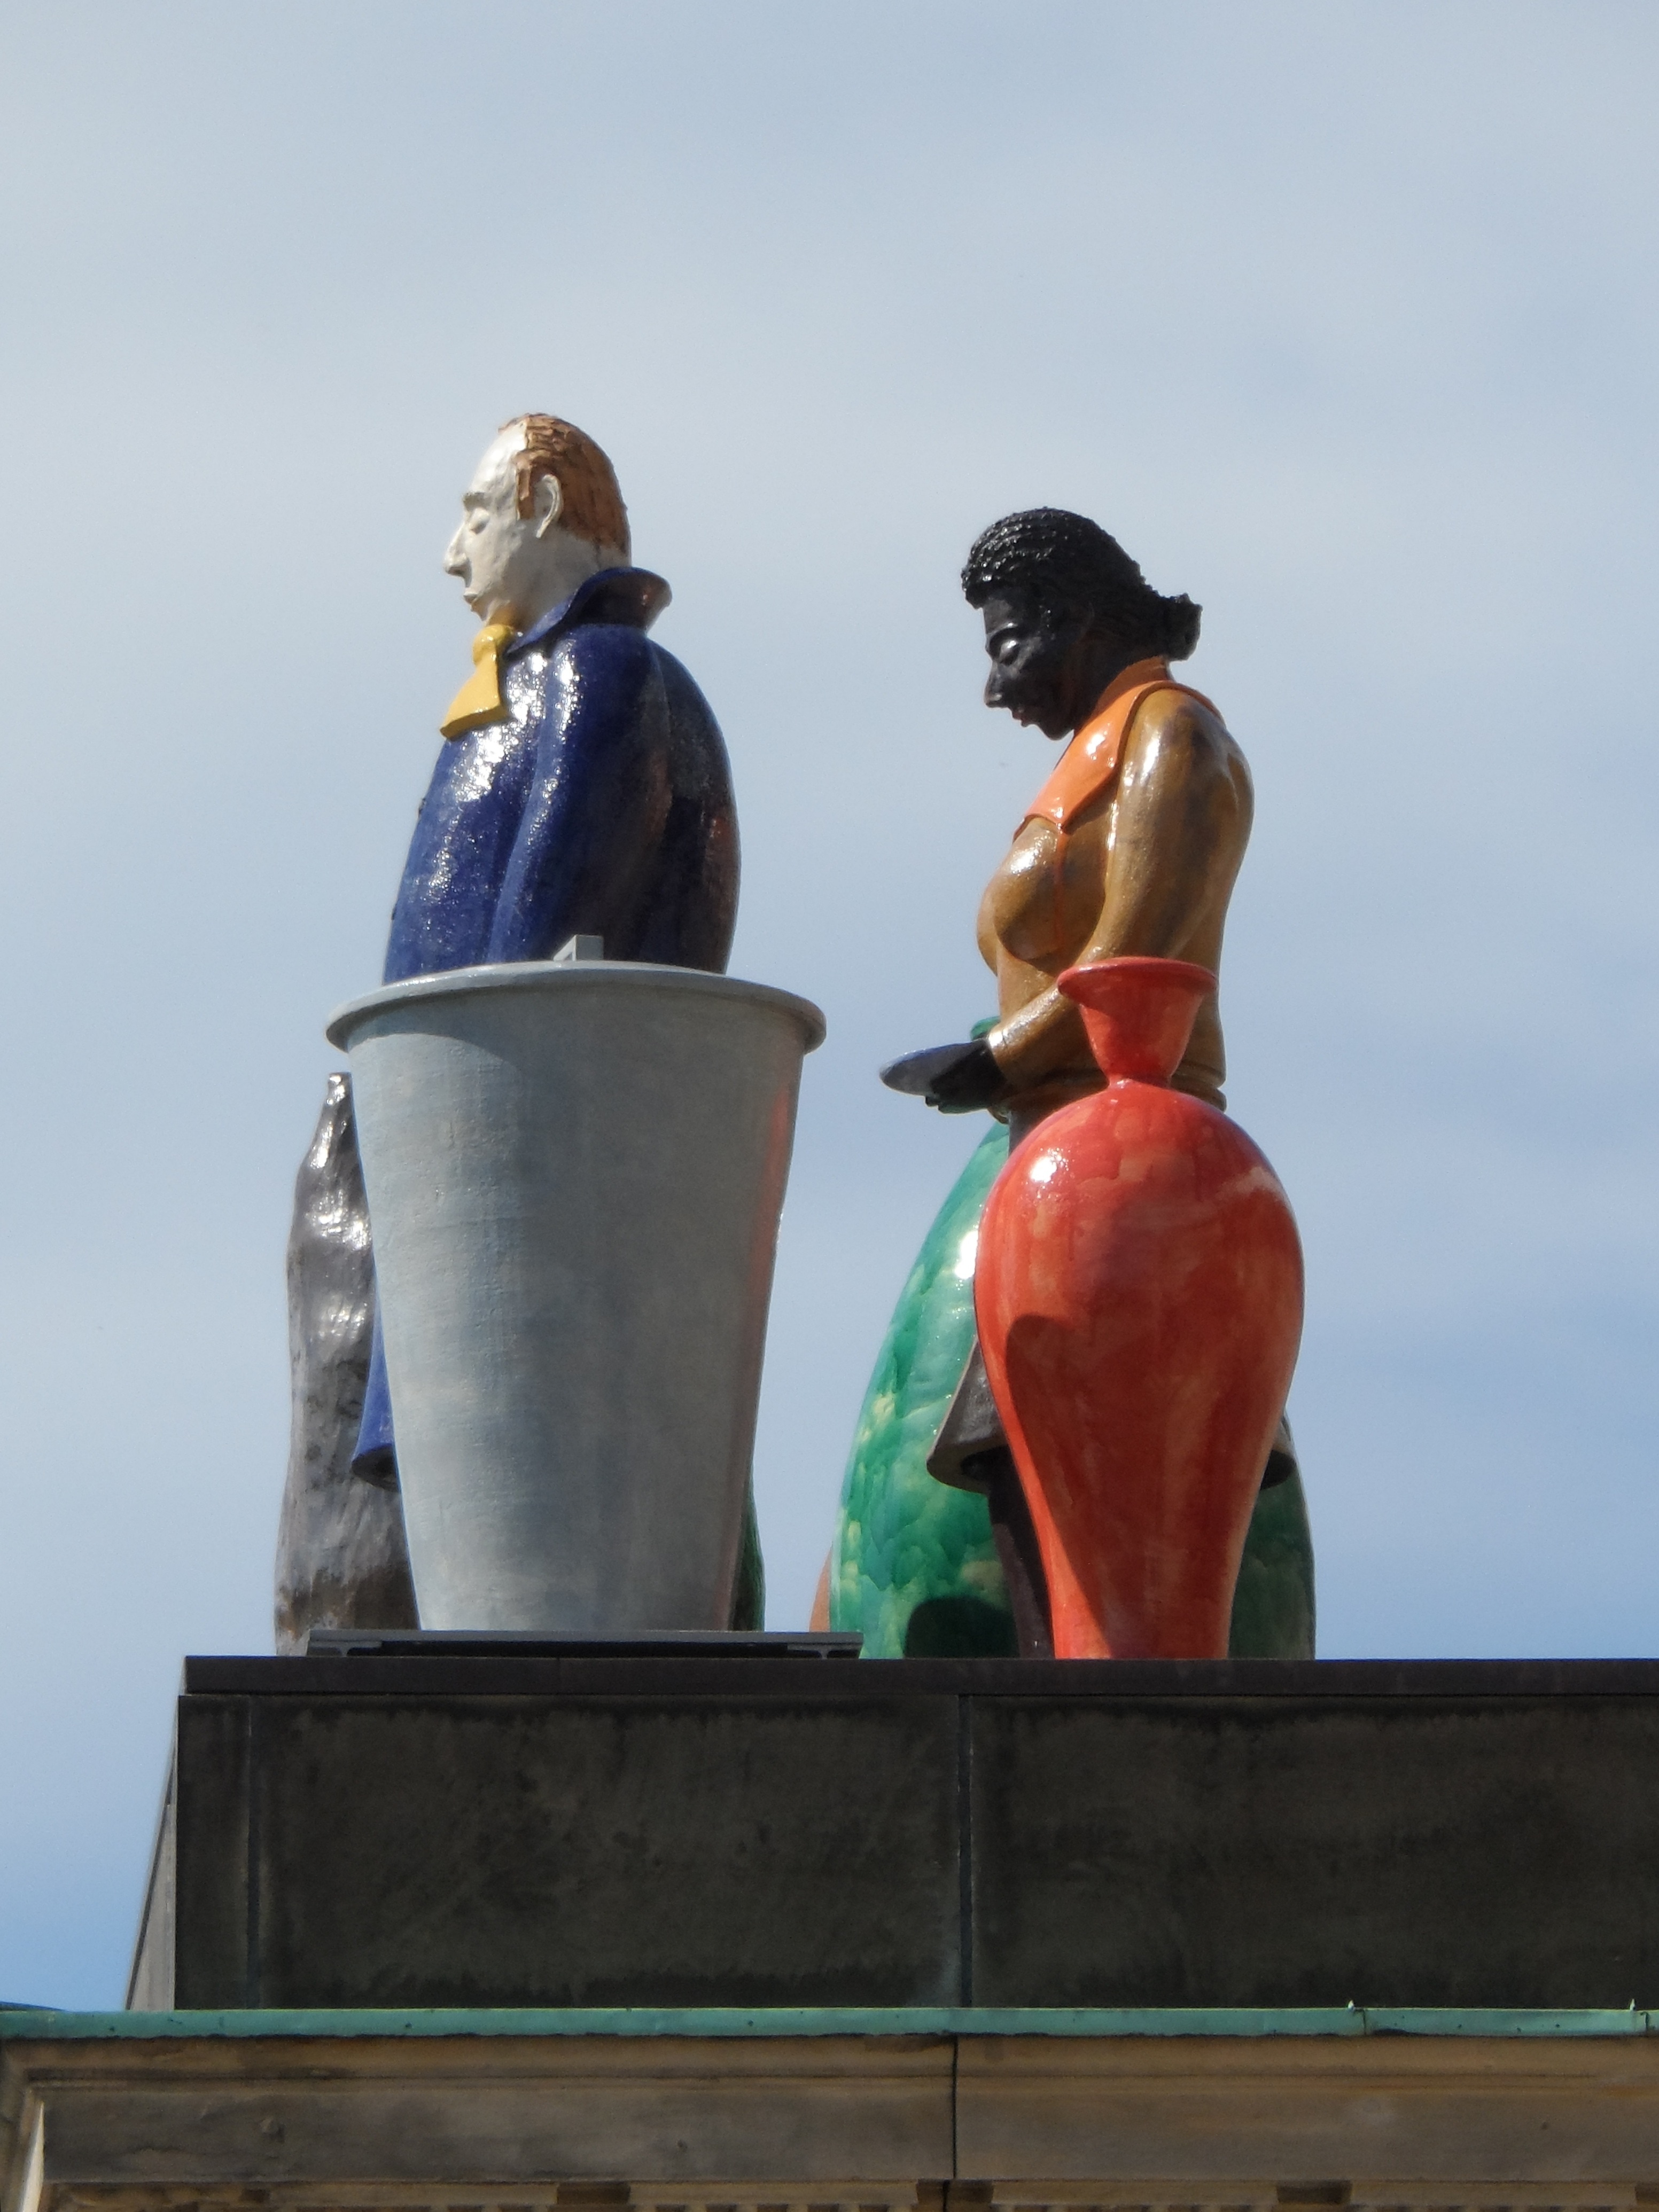 man and woman ceramic figurine